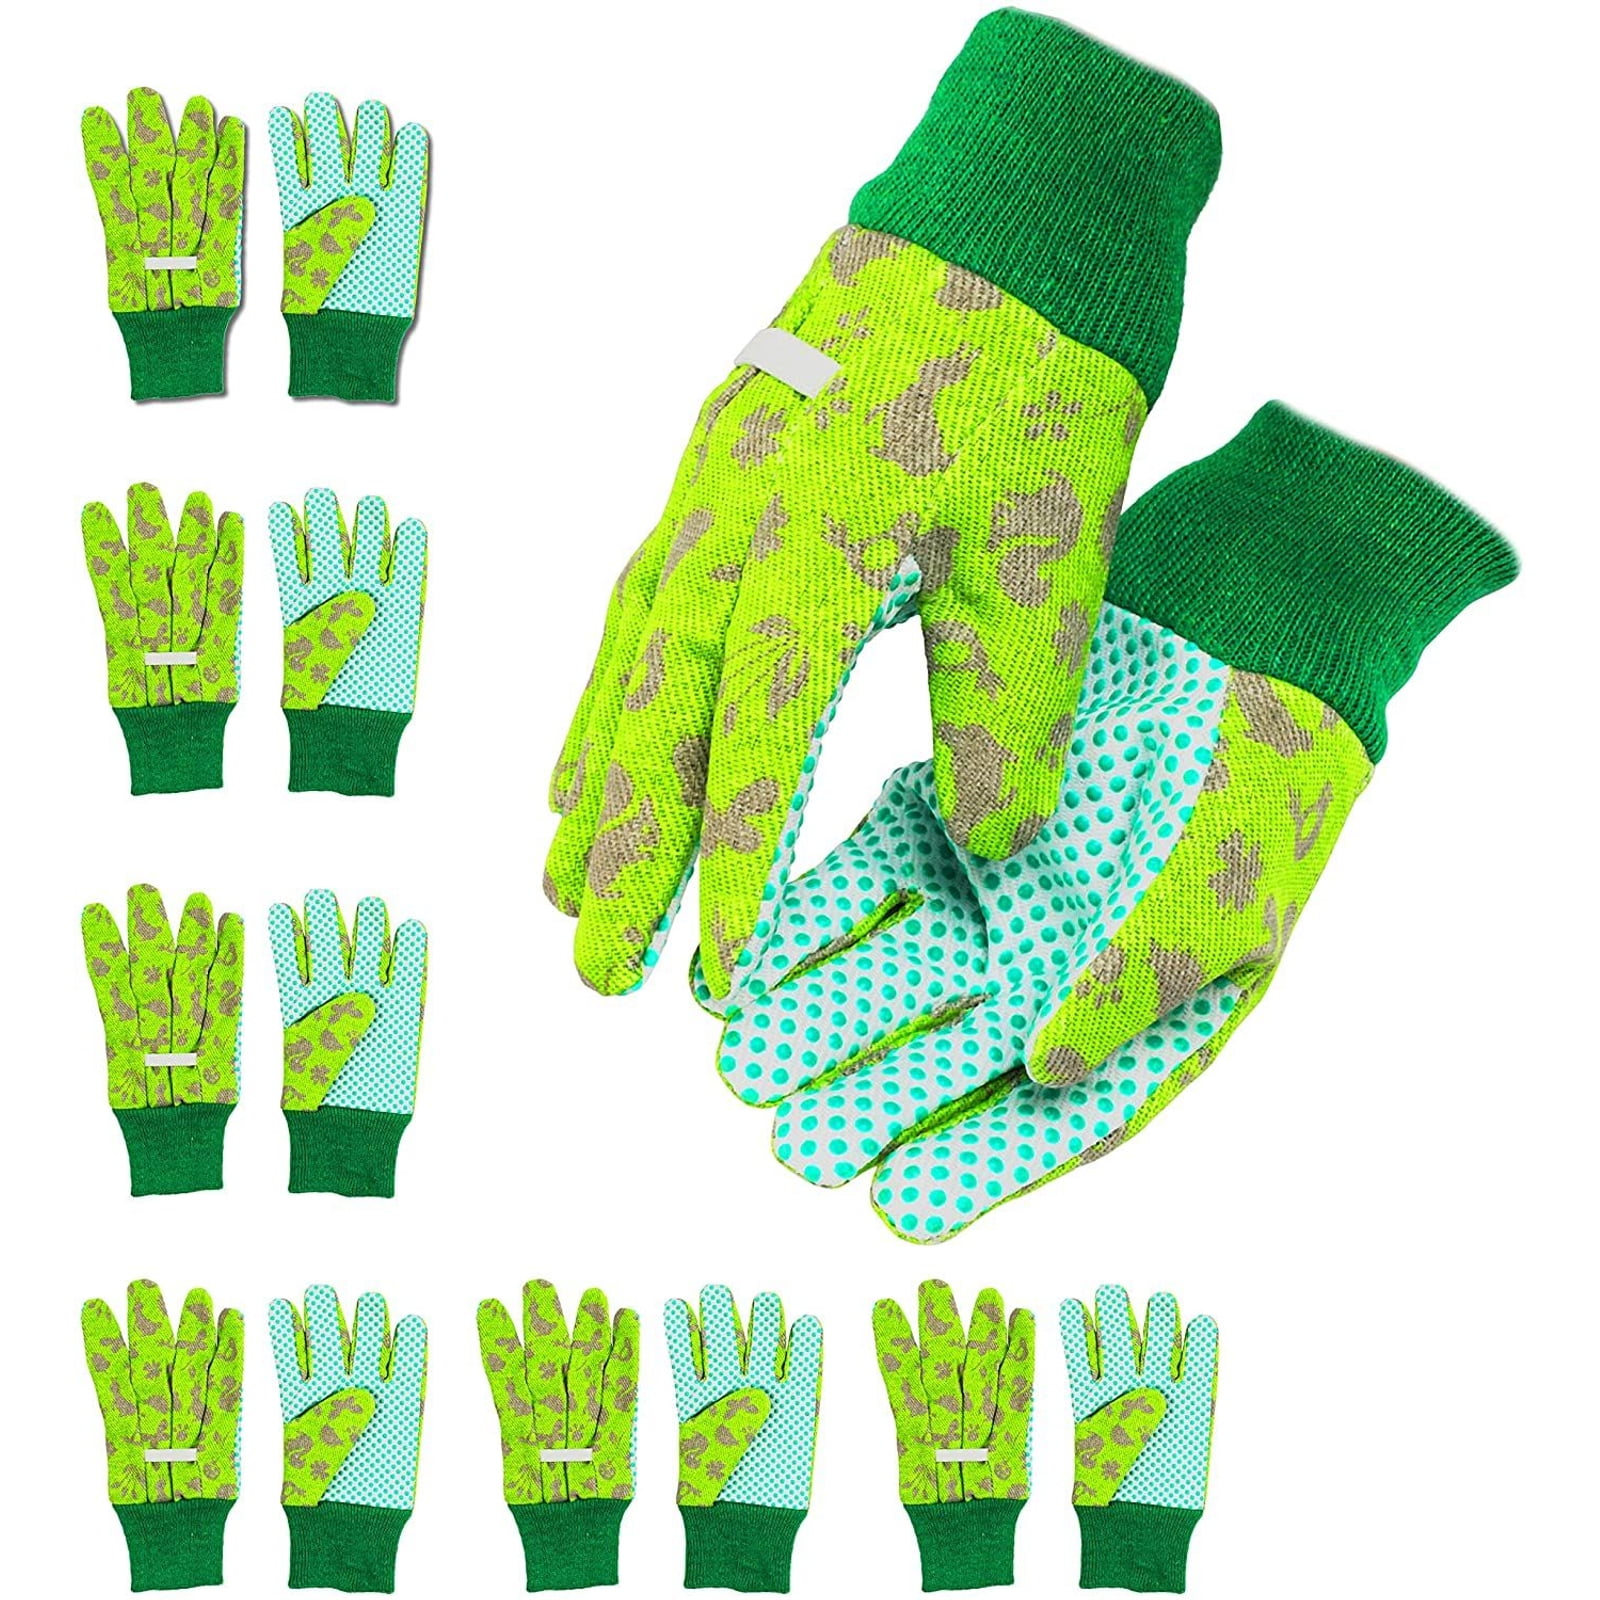 Foam Rubber Coated Garden & Vgo 3 Pairs Age 3-5 Kids Multicolored Garden Gloves 